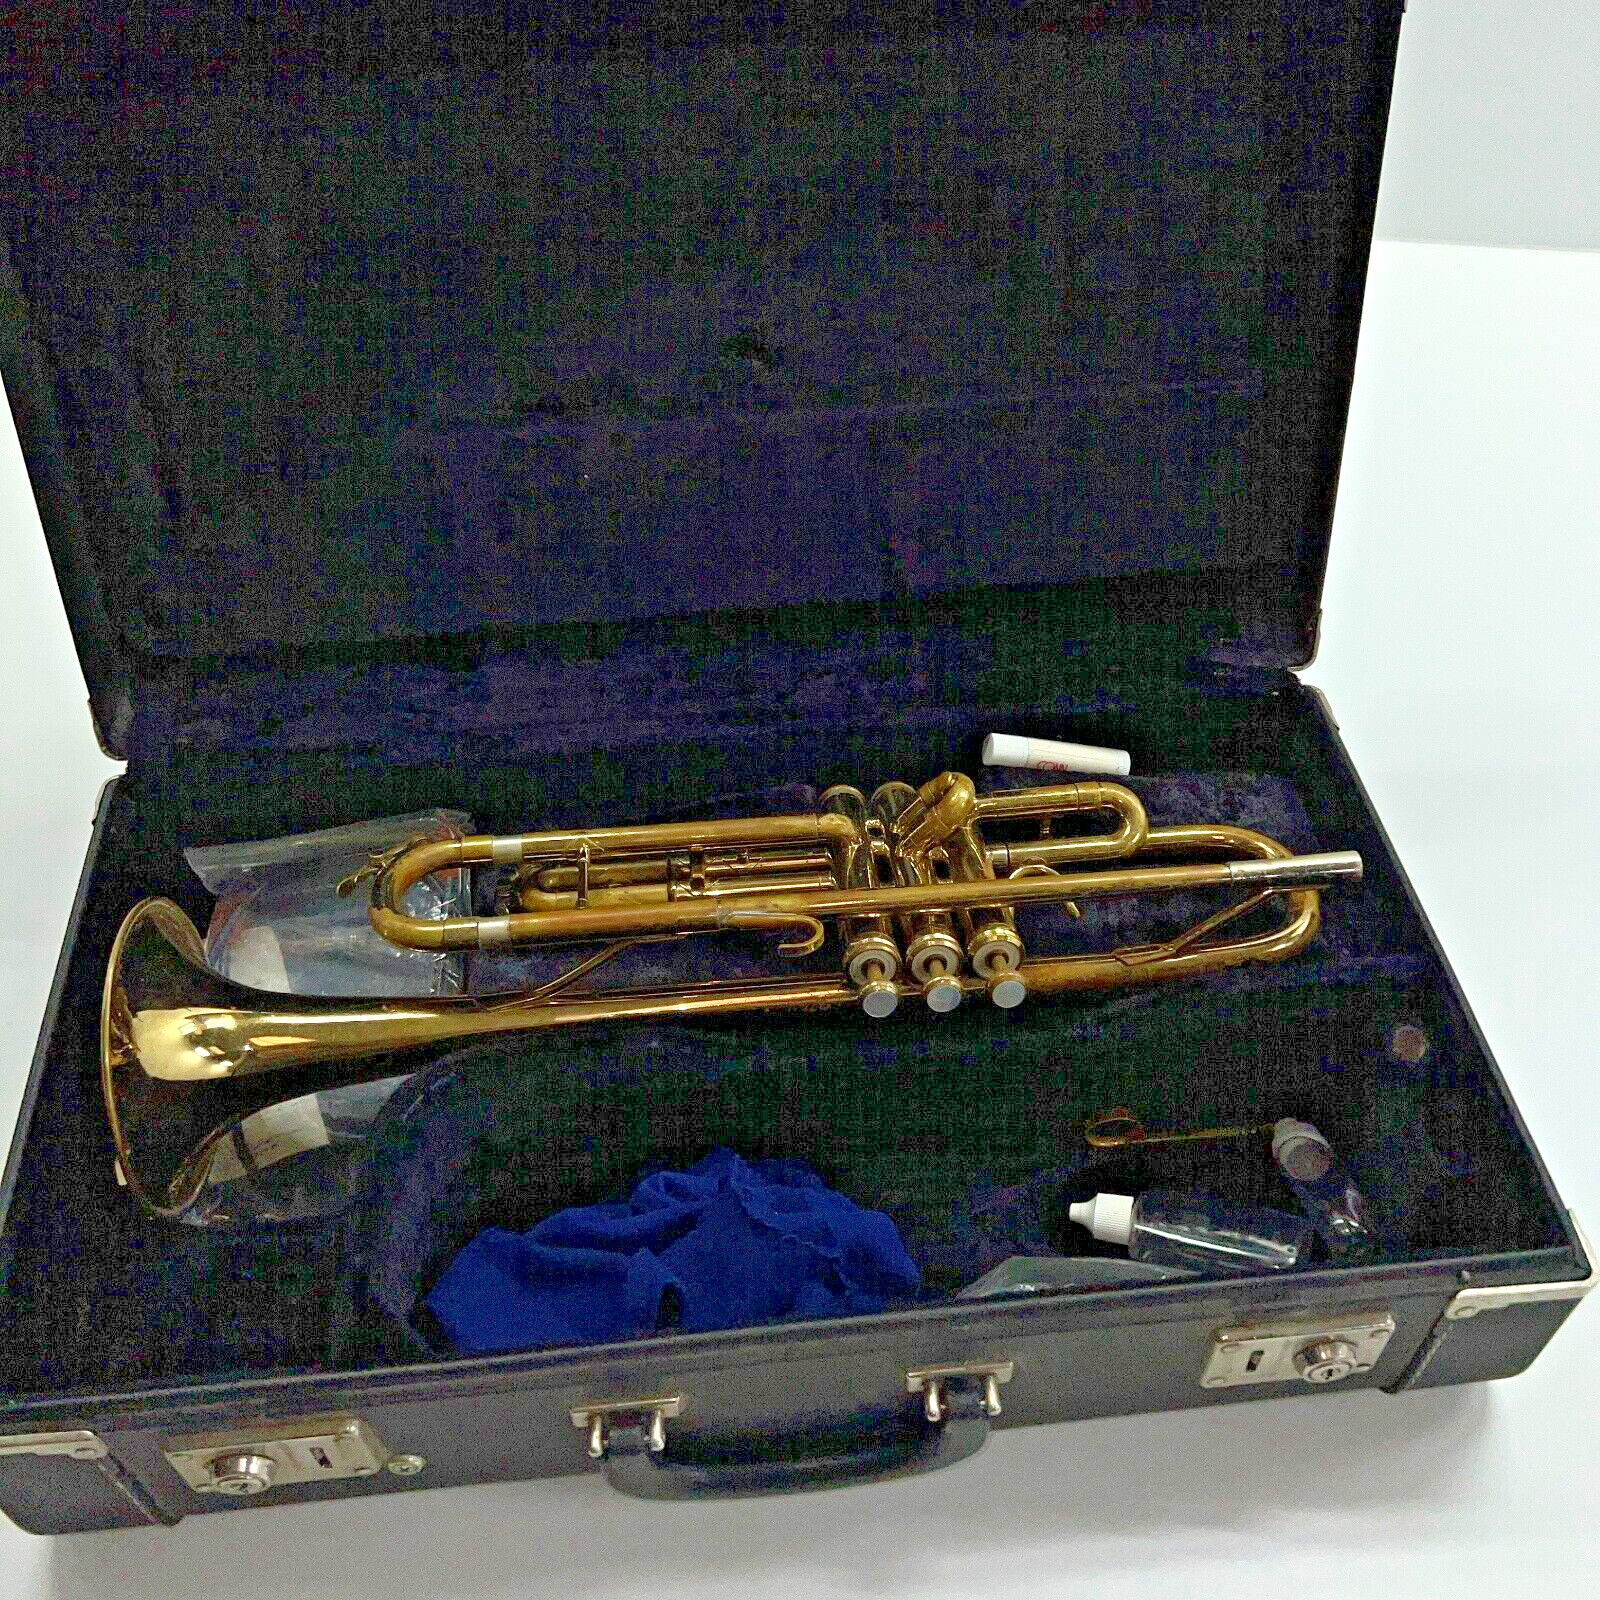 King 1501 U.S.A. Trumpet in Case for Restoration 1